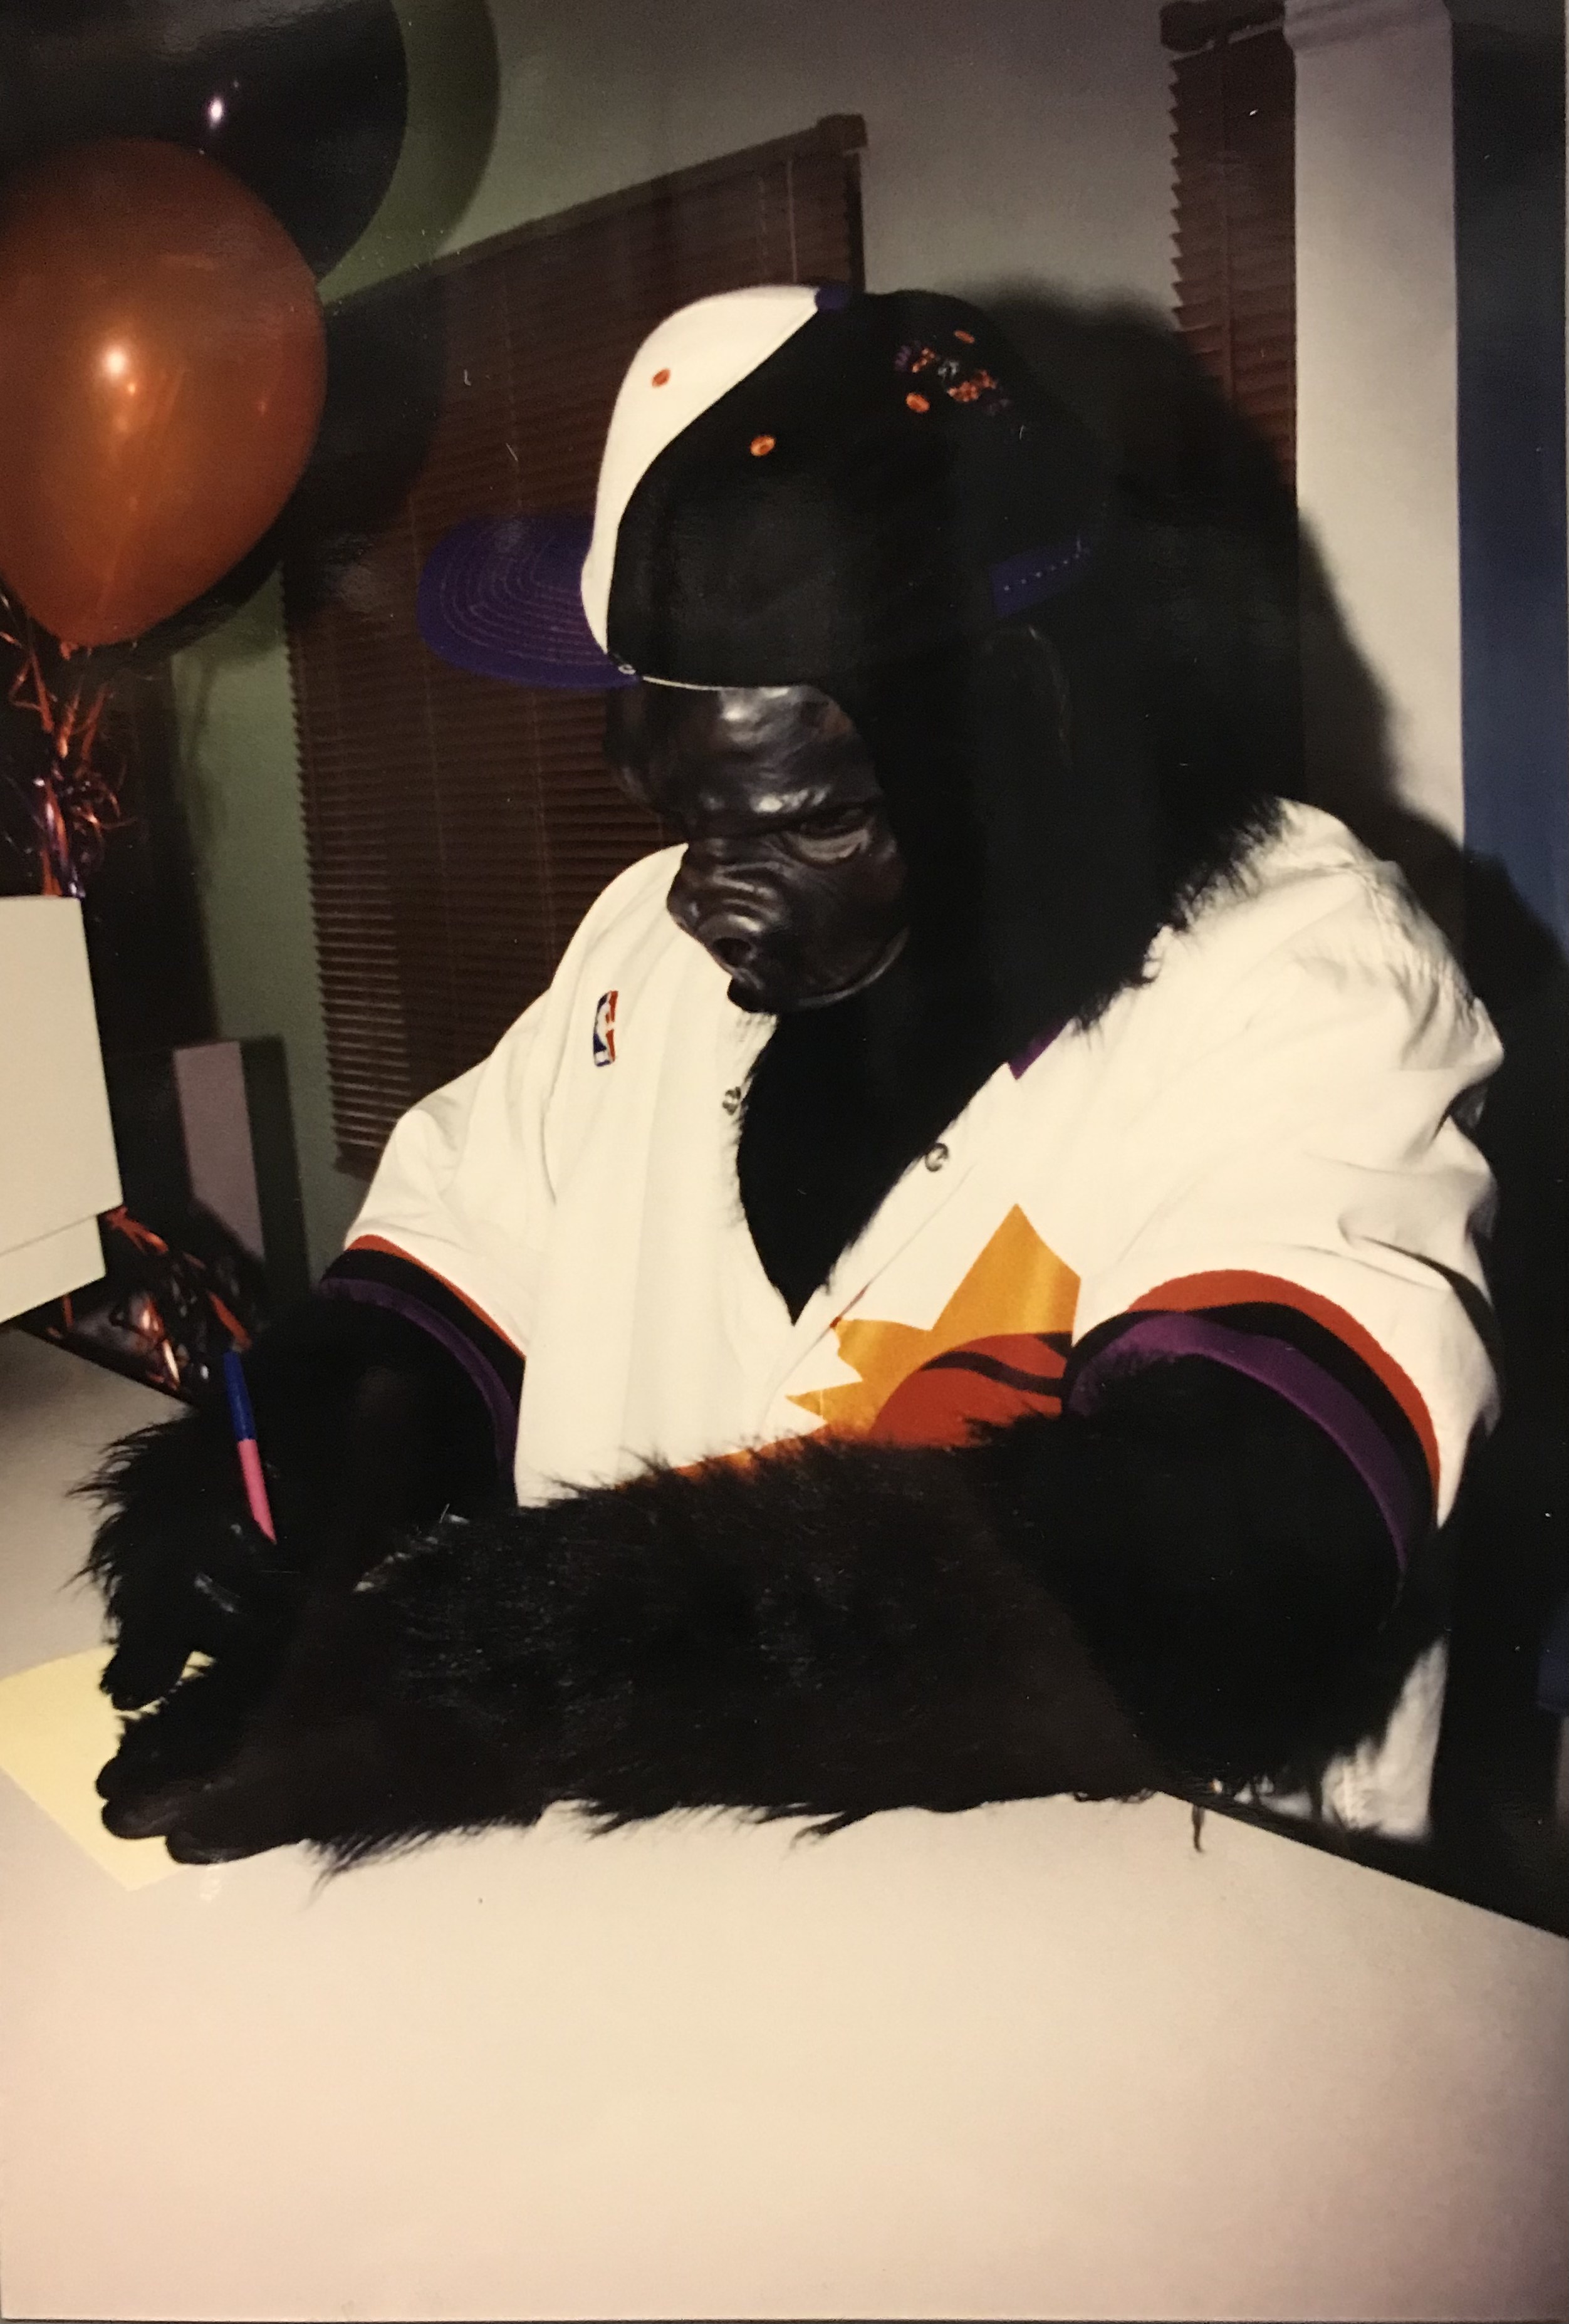 Suns Gorilla taking his written test